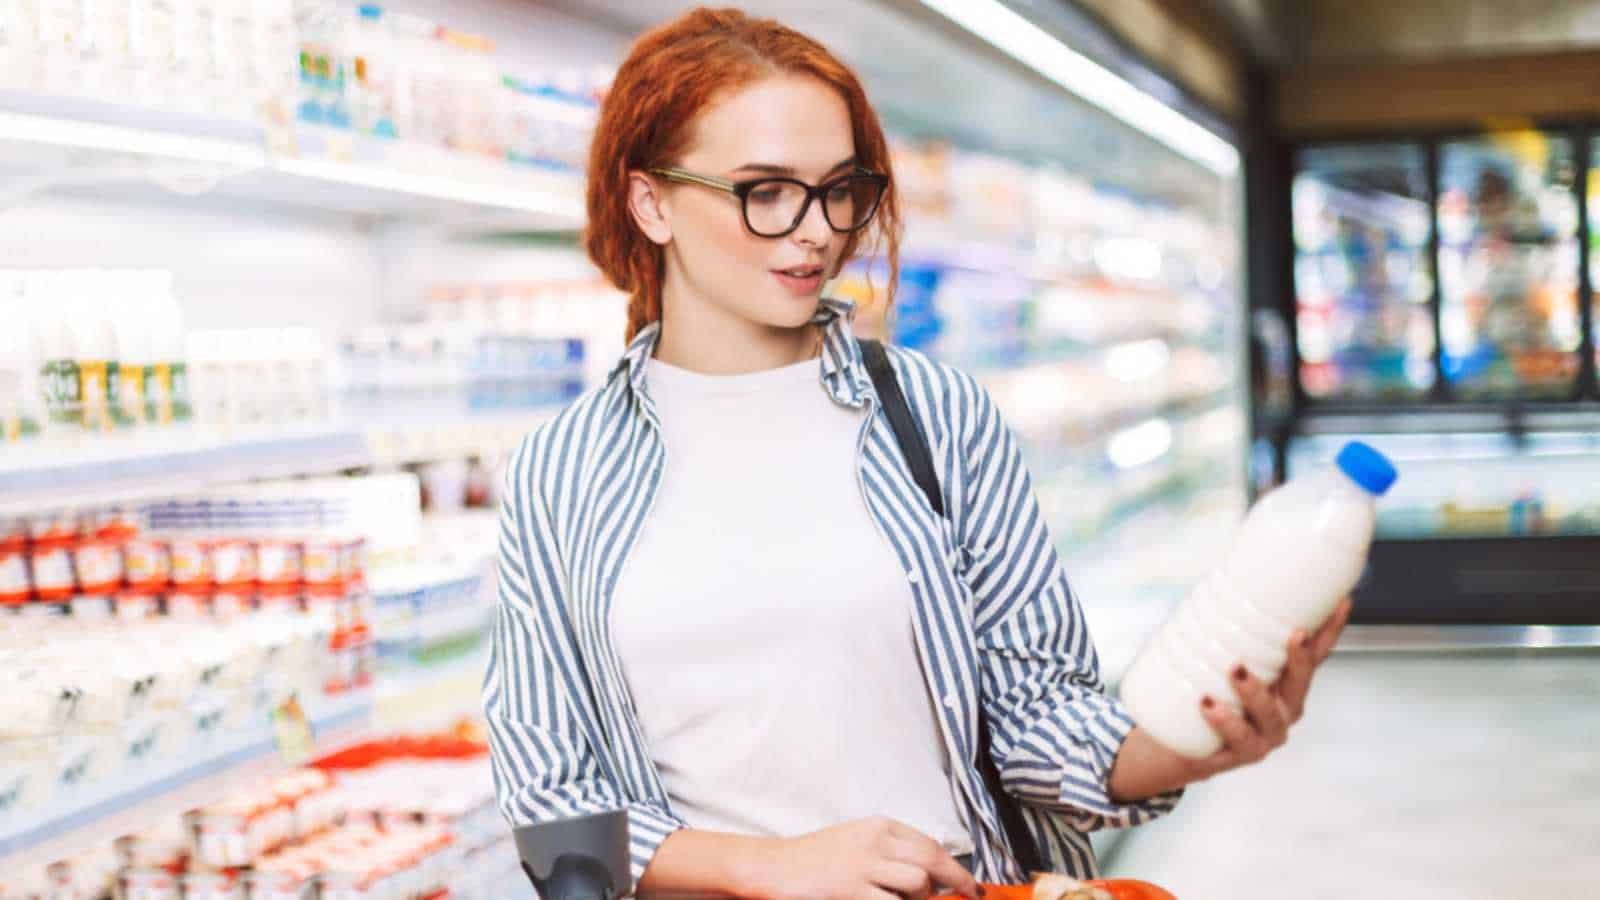 Woman buying milk